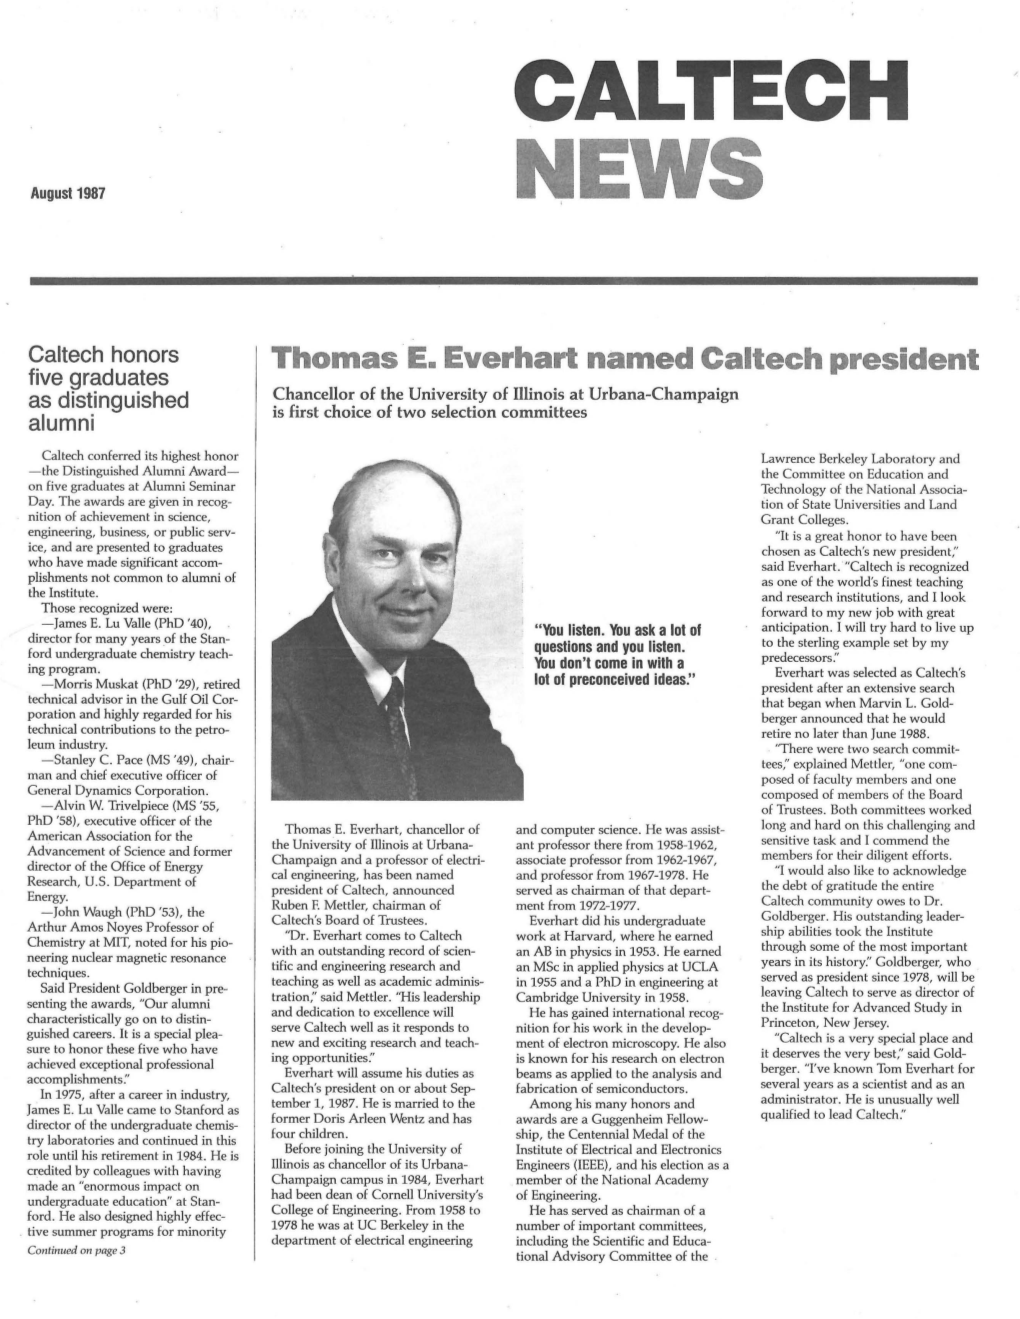 Thomas E. Everhart Named Caltech President